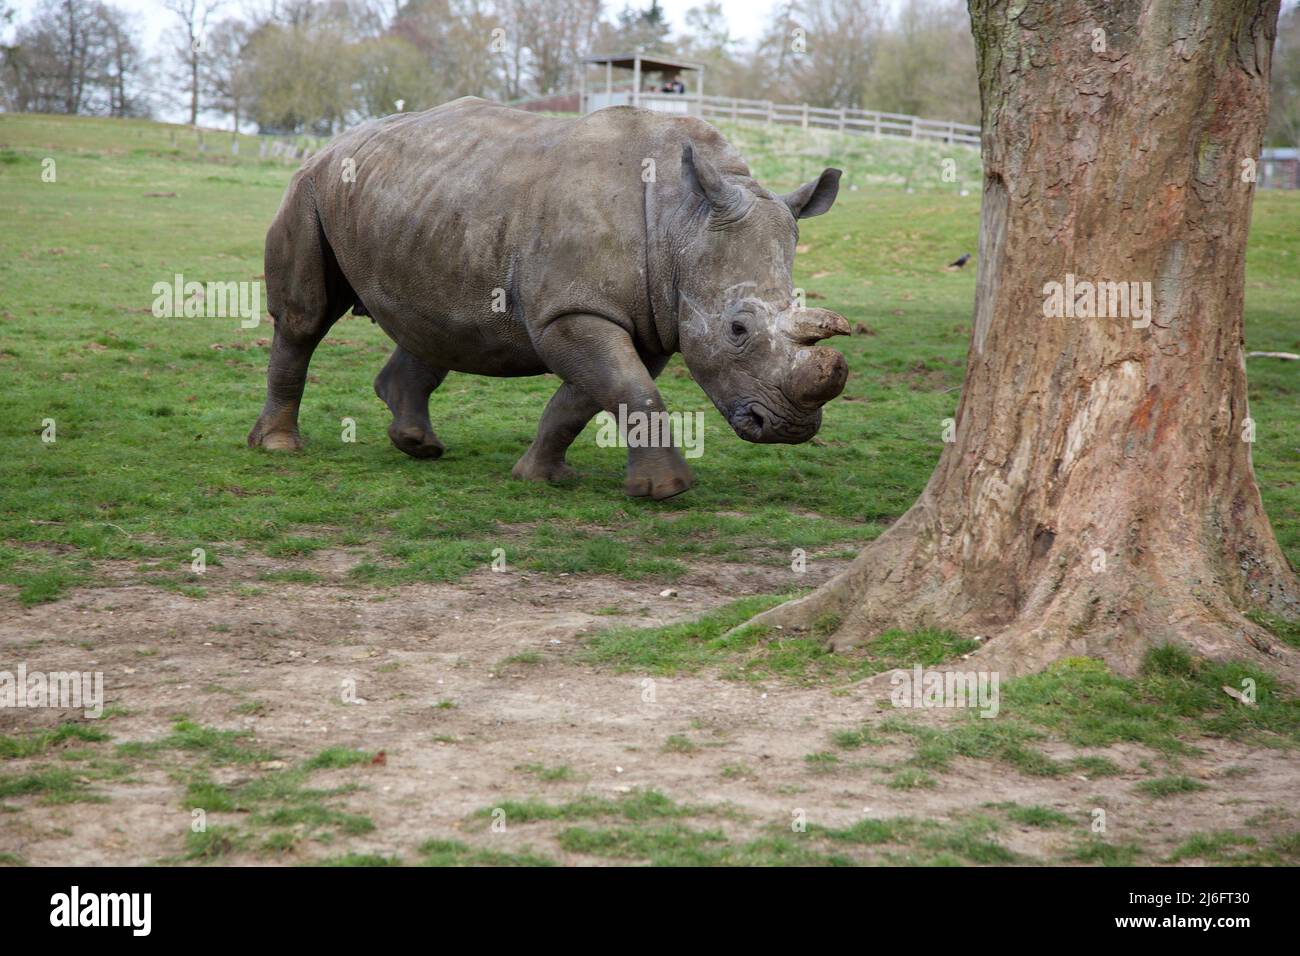 Southern White Rhino, Whipsnade Zoo, England. Stock Photo